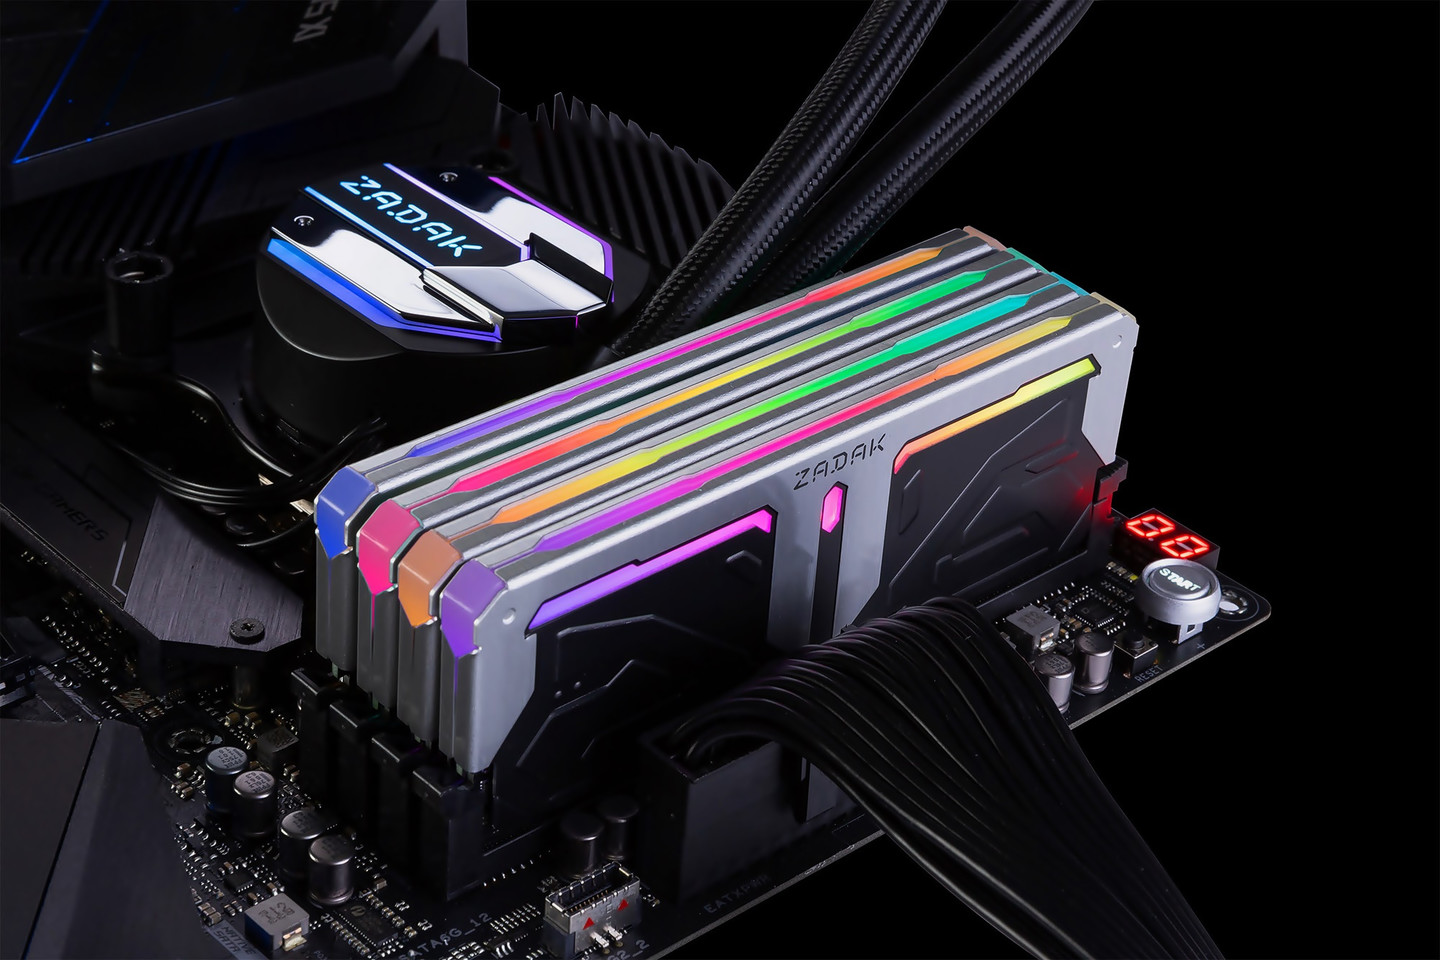 ZADAK Announces the SPARK RGB DDR4 Memory | TechPowerUp